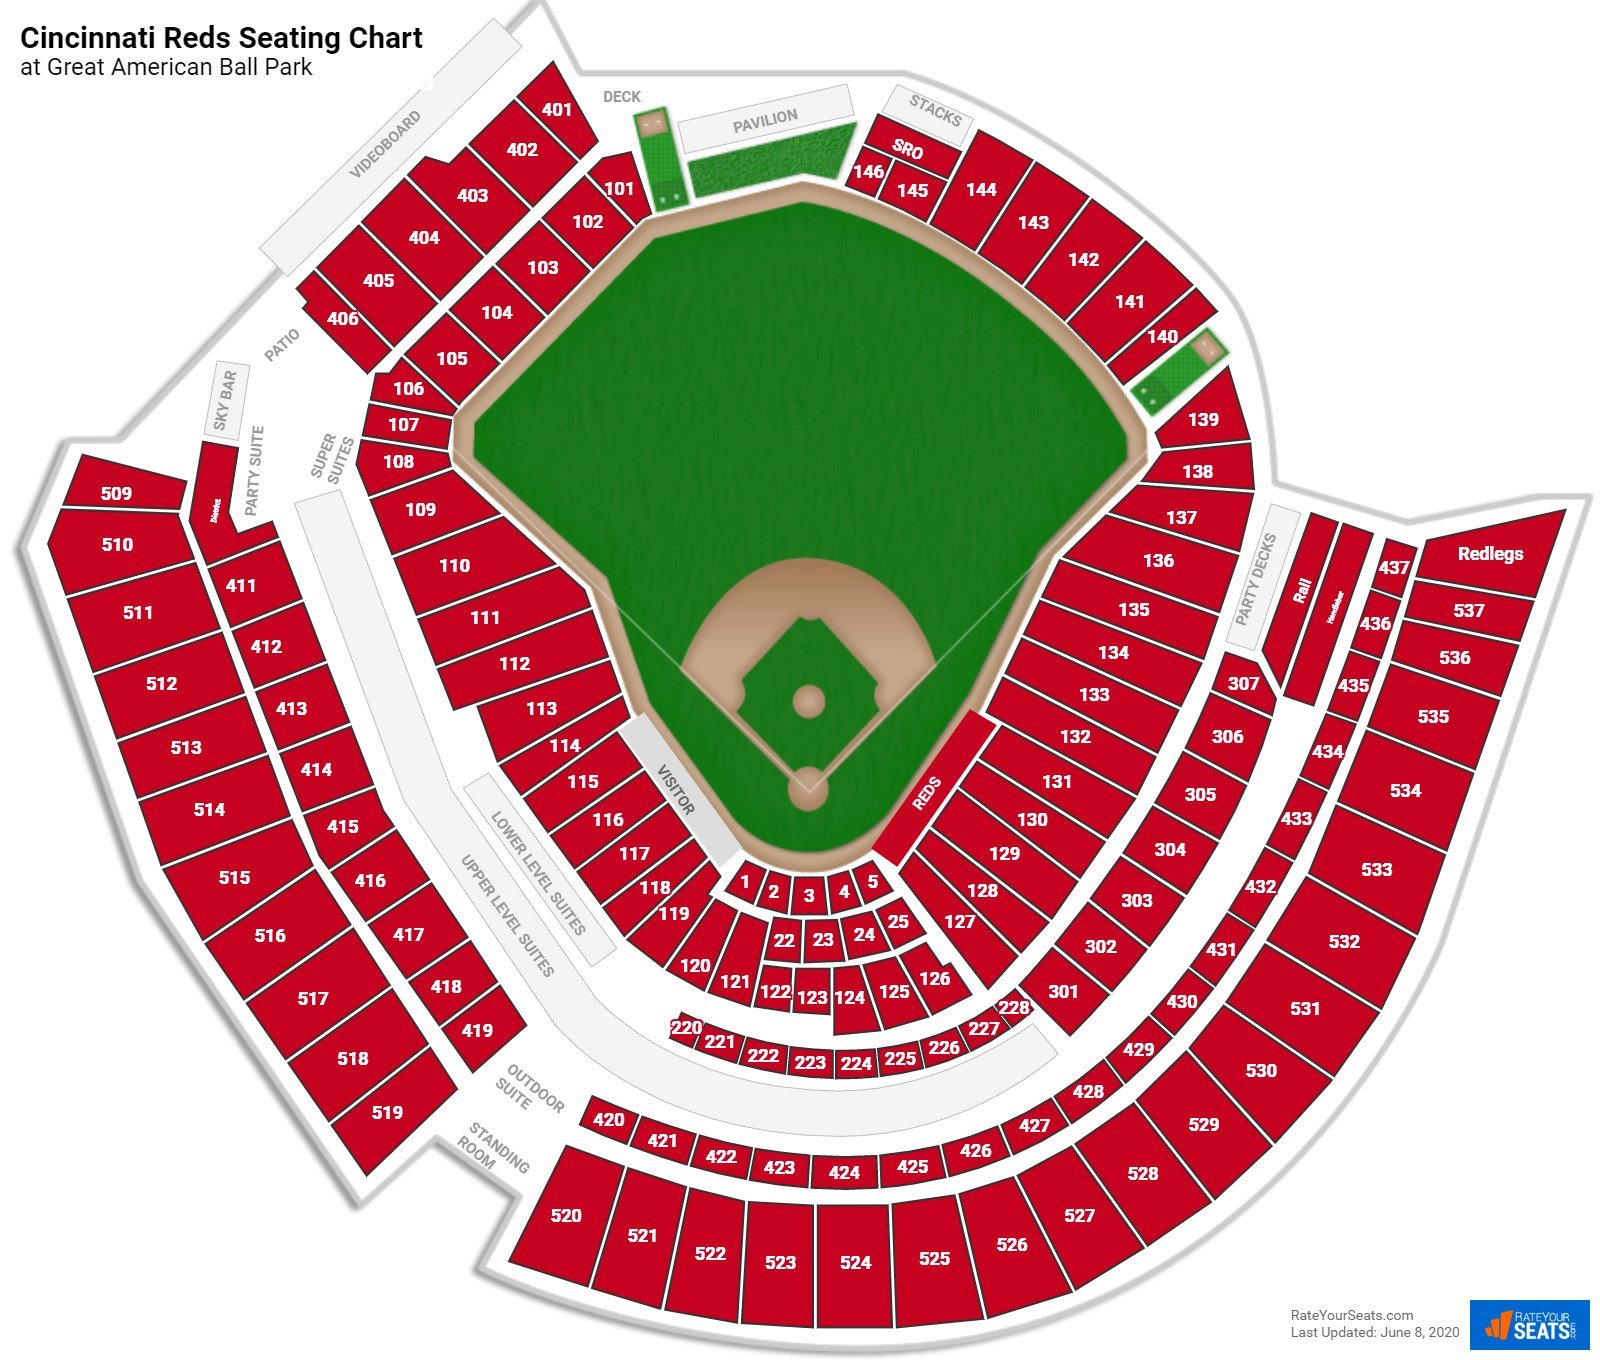 Cincinnati Reds - The POW-MIA seat at Goodyear Ballpark #RedsSpring